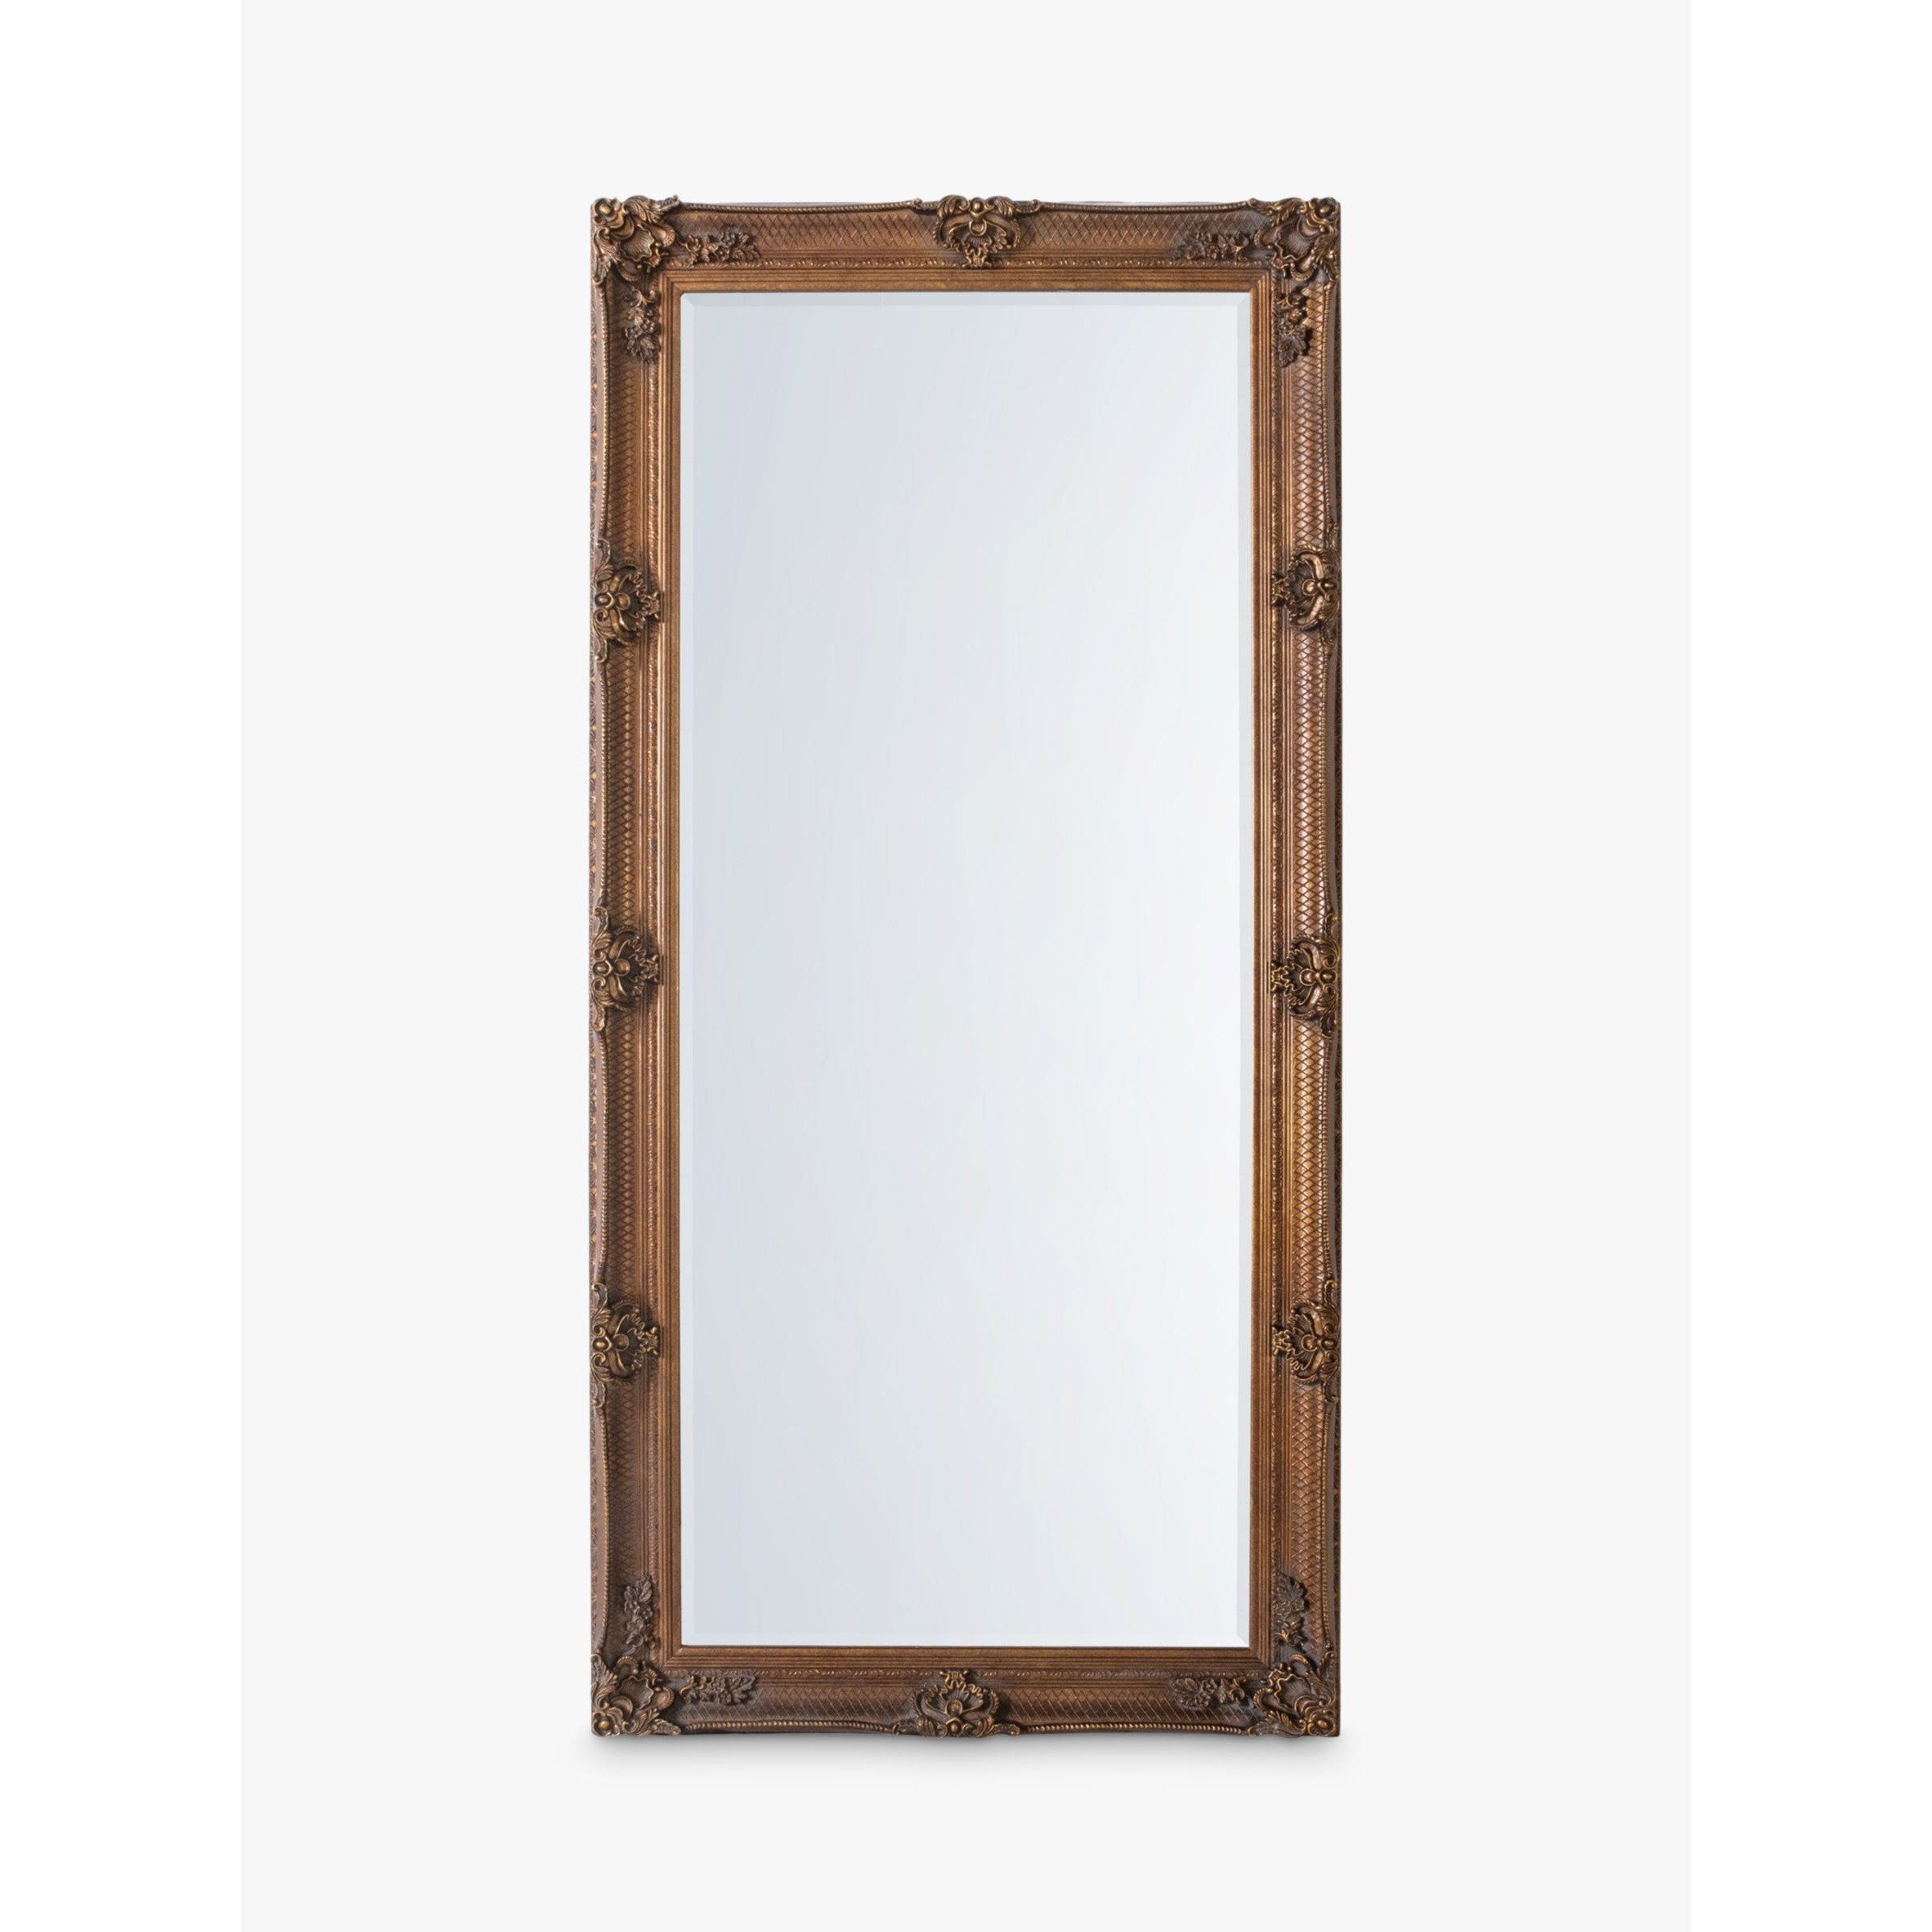 Gallery Direct Denver Baroque Wood Frame Leaner Mirror, 165 x 79.5cm, Gold - image 1